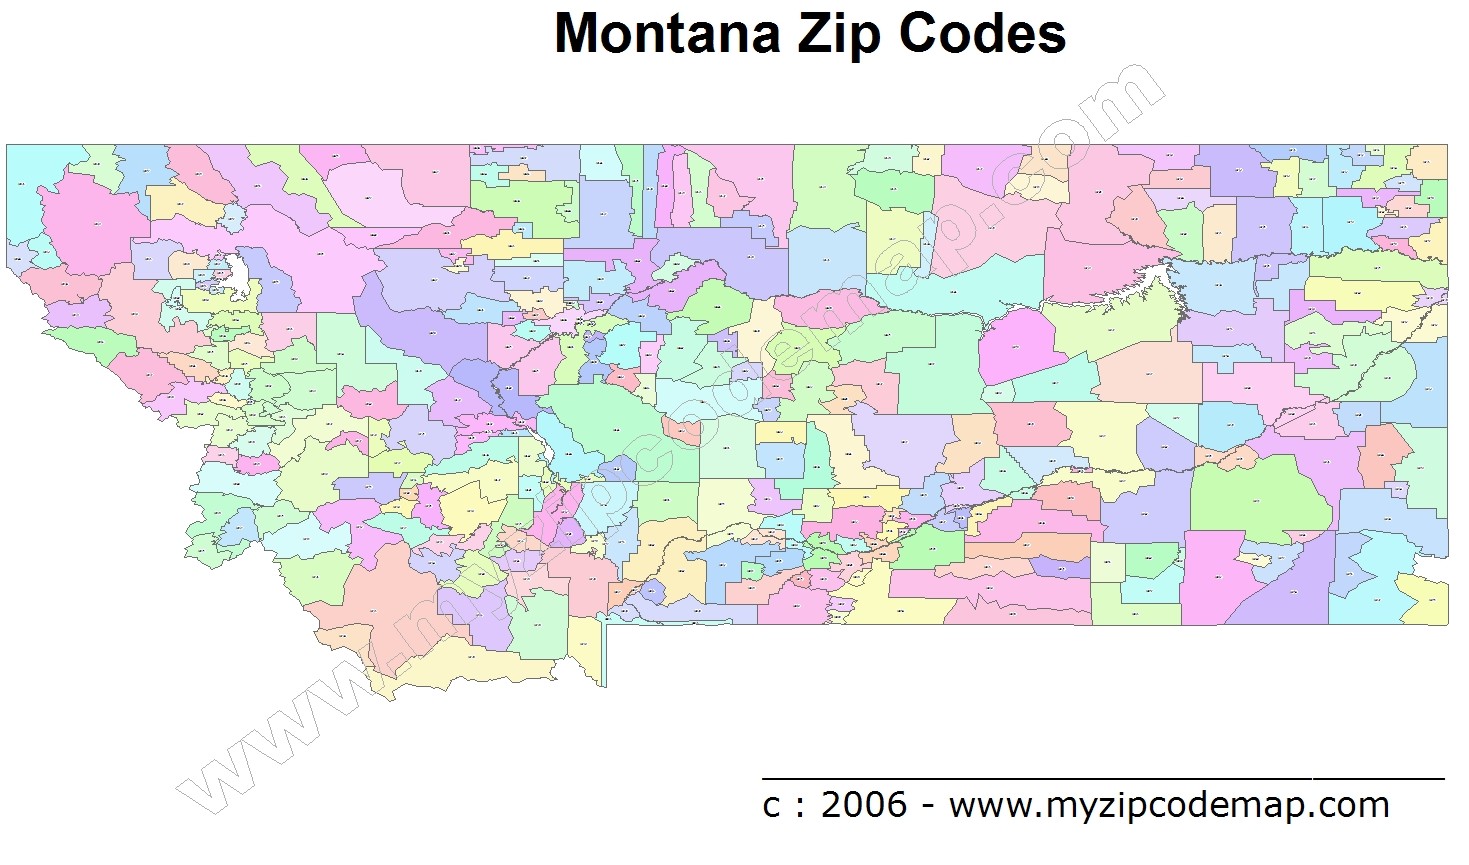 Montana Zip Code Maps Free Montana Zip Code Maps.